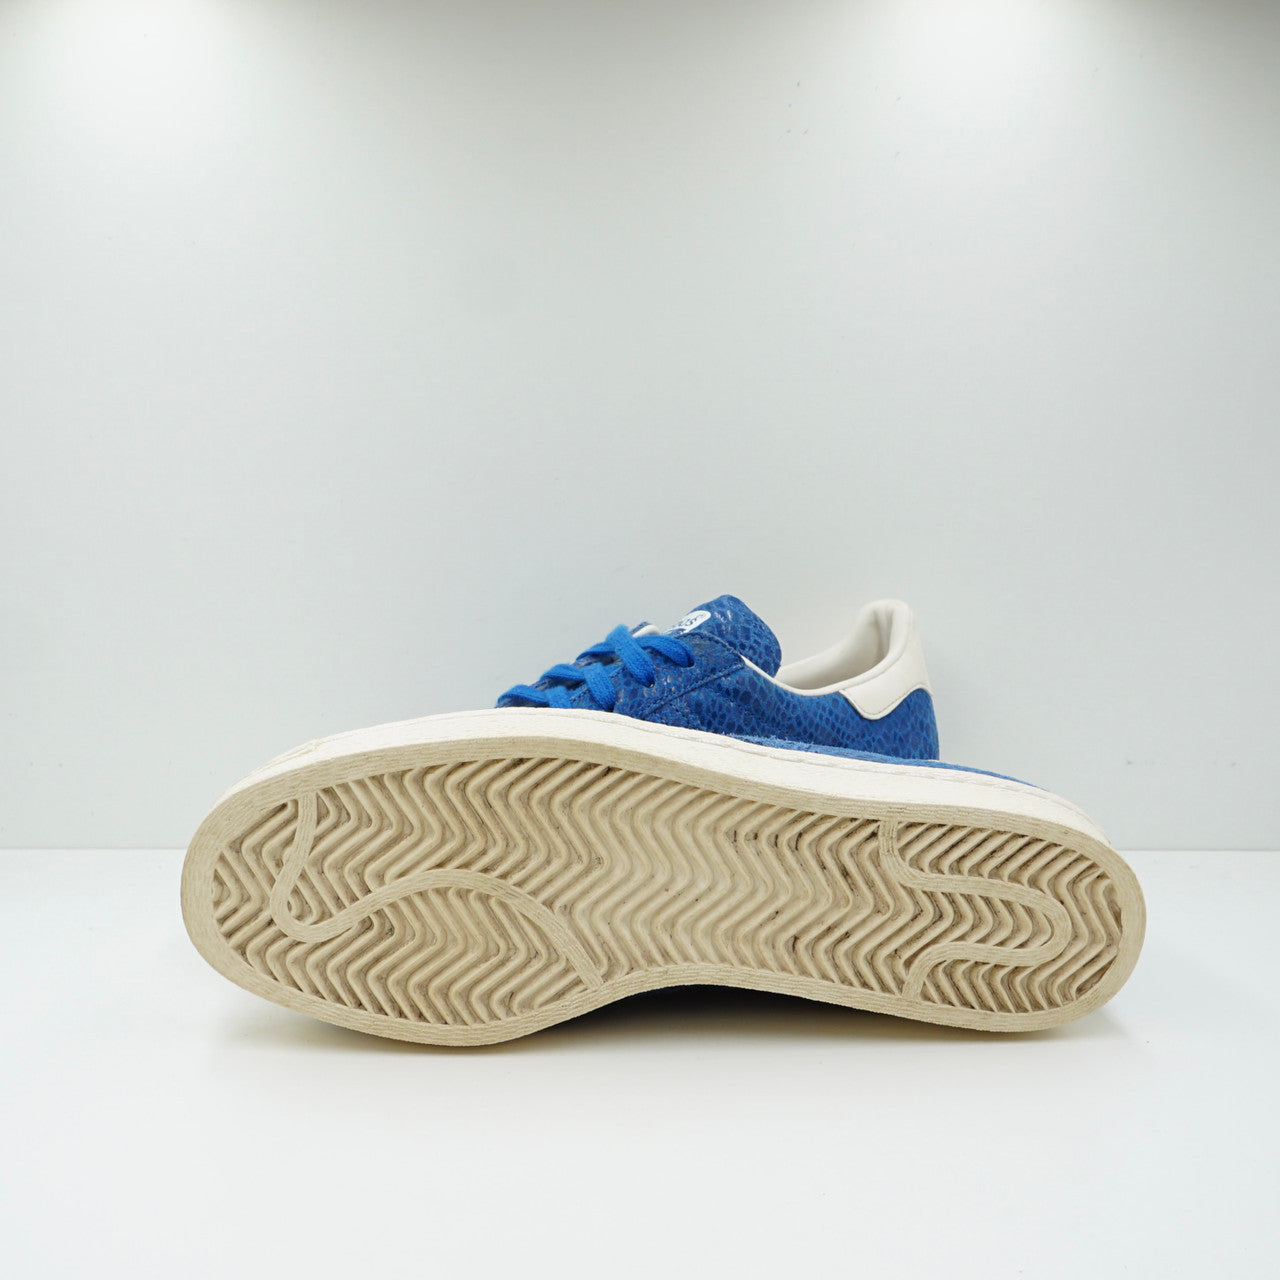 Adidas Superstar 80s Surf Blue (W)